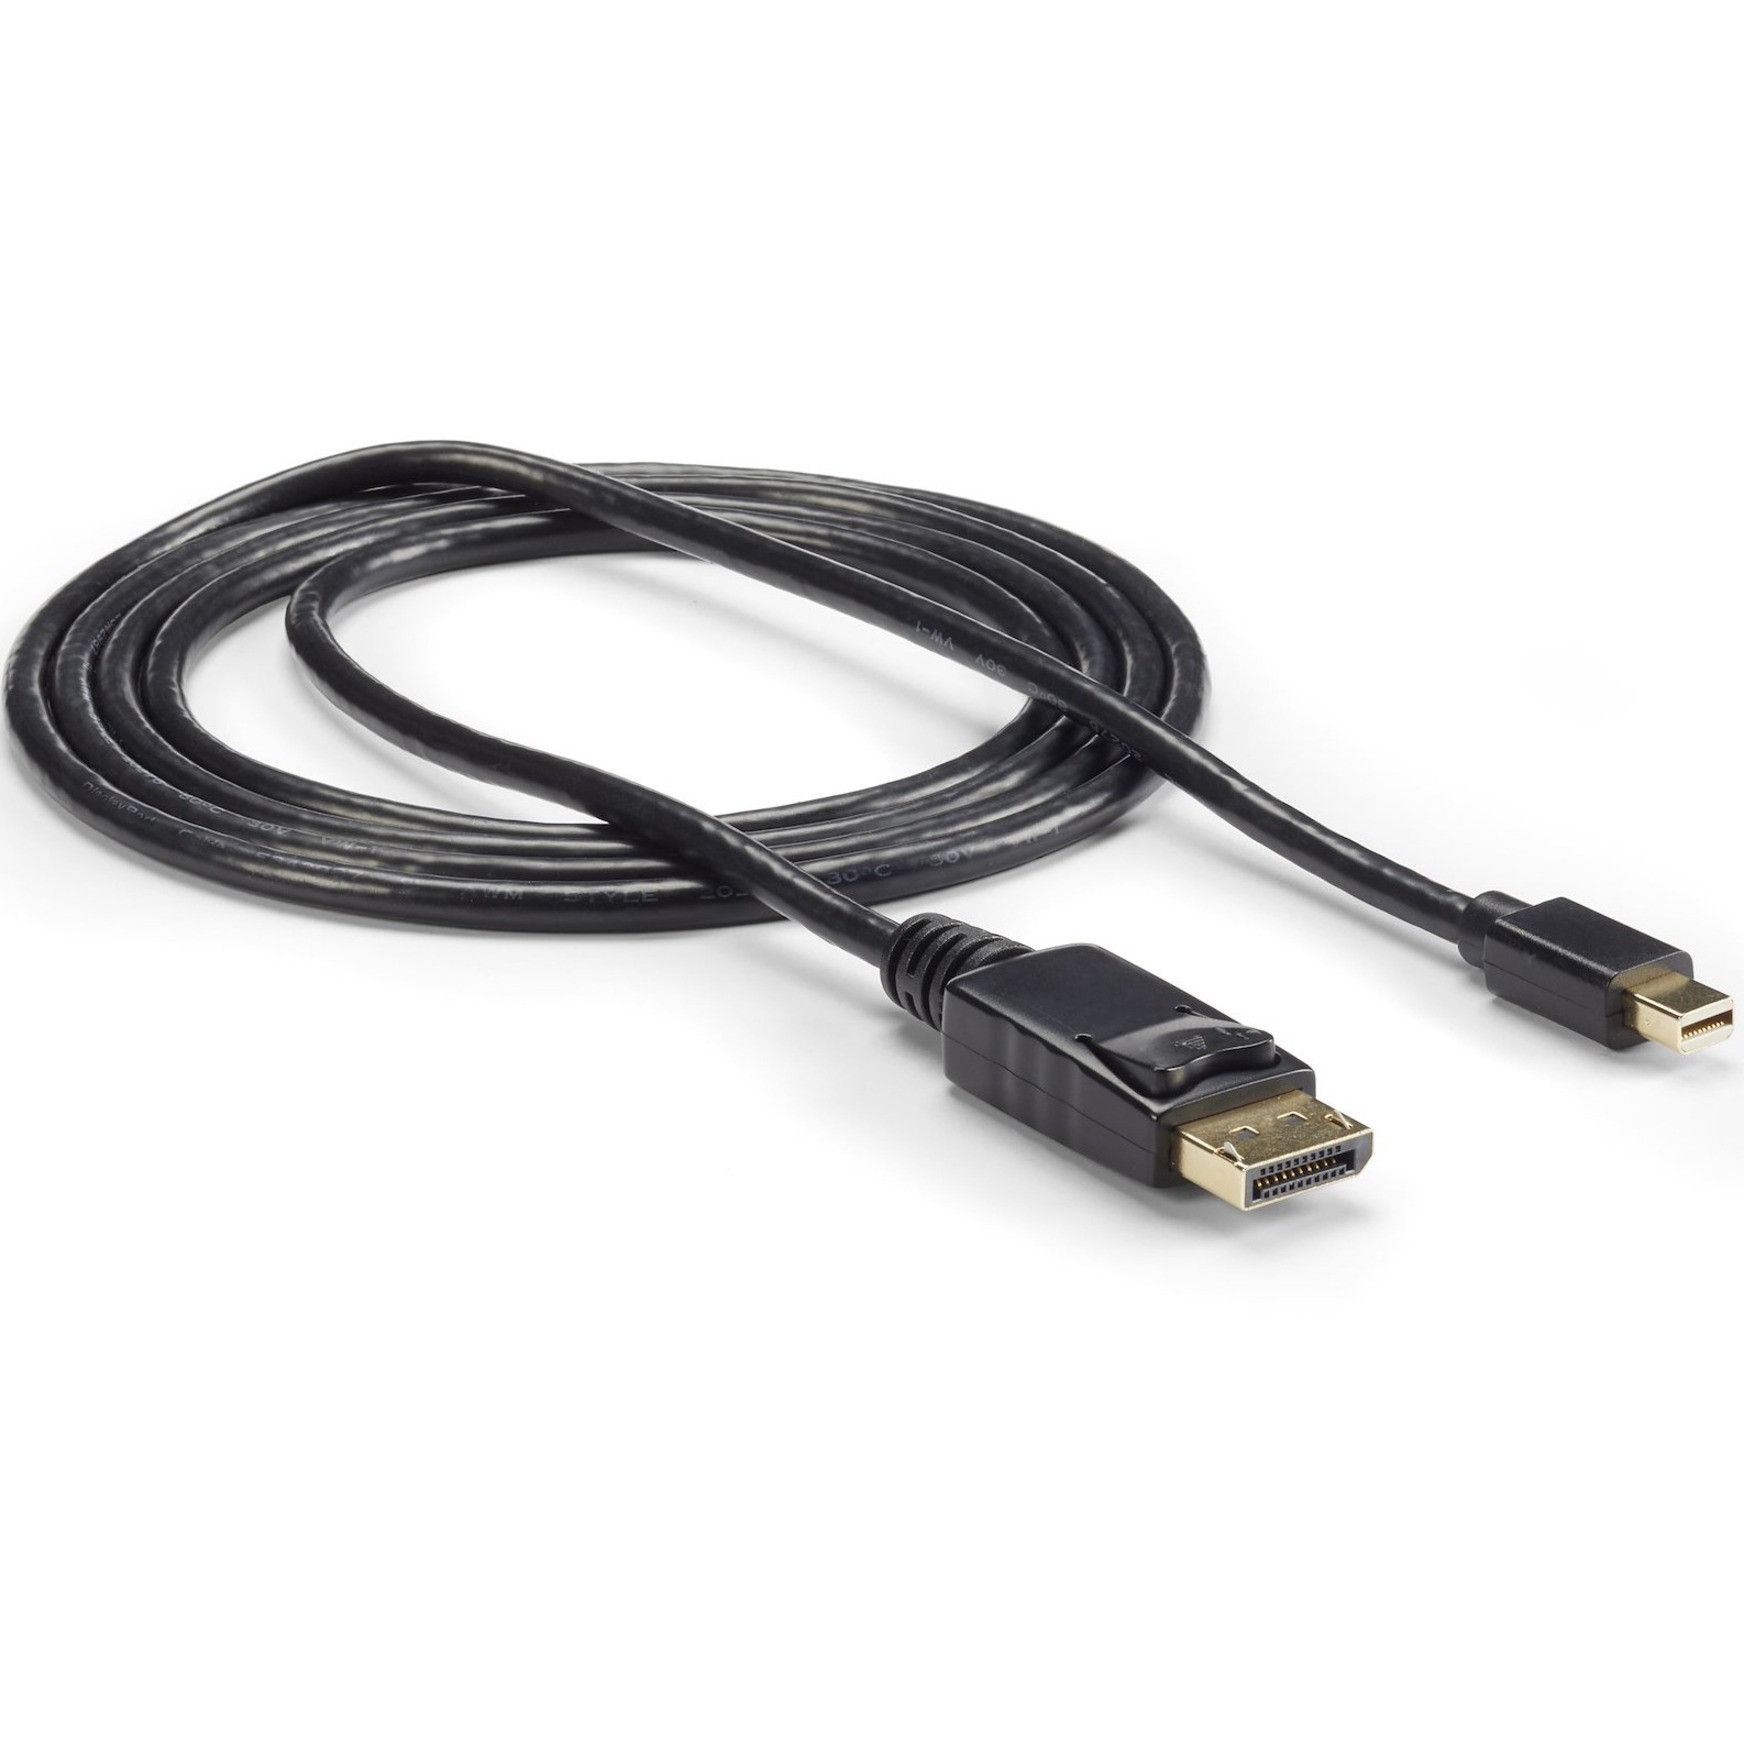 Startech .com 10ft (3m) Mini DisplayPort to DisplayPort 1.2 Cable, 4K x 2K  mDP to DisplayPort Adapter Cable, Mini DP to DP Cable10ft/3m Min